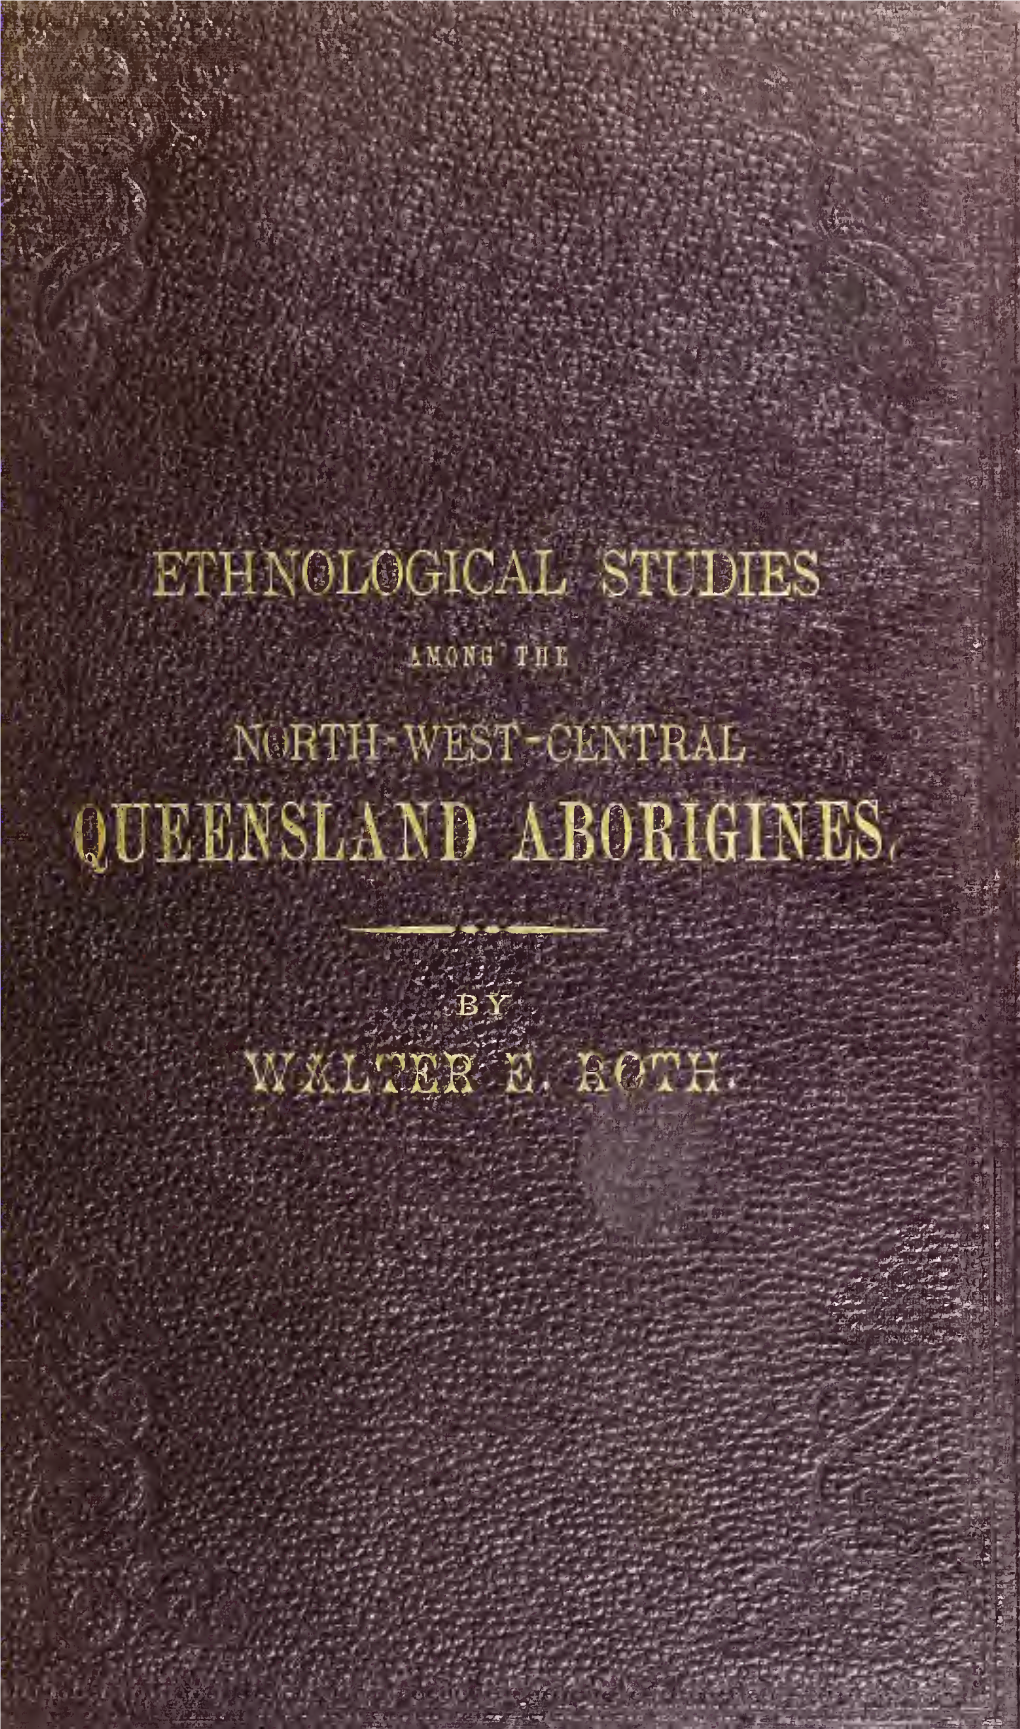 Ethnological Studies Among the North-West-Central Queensland